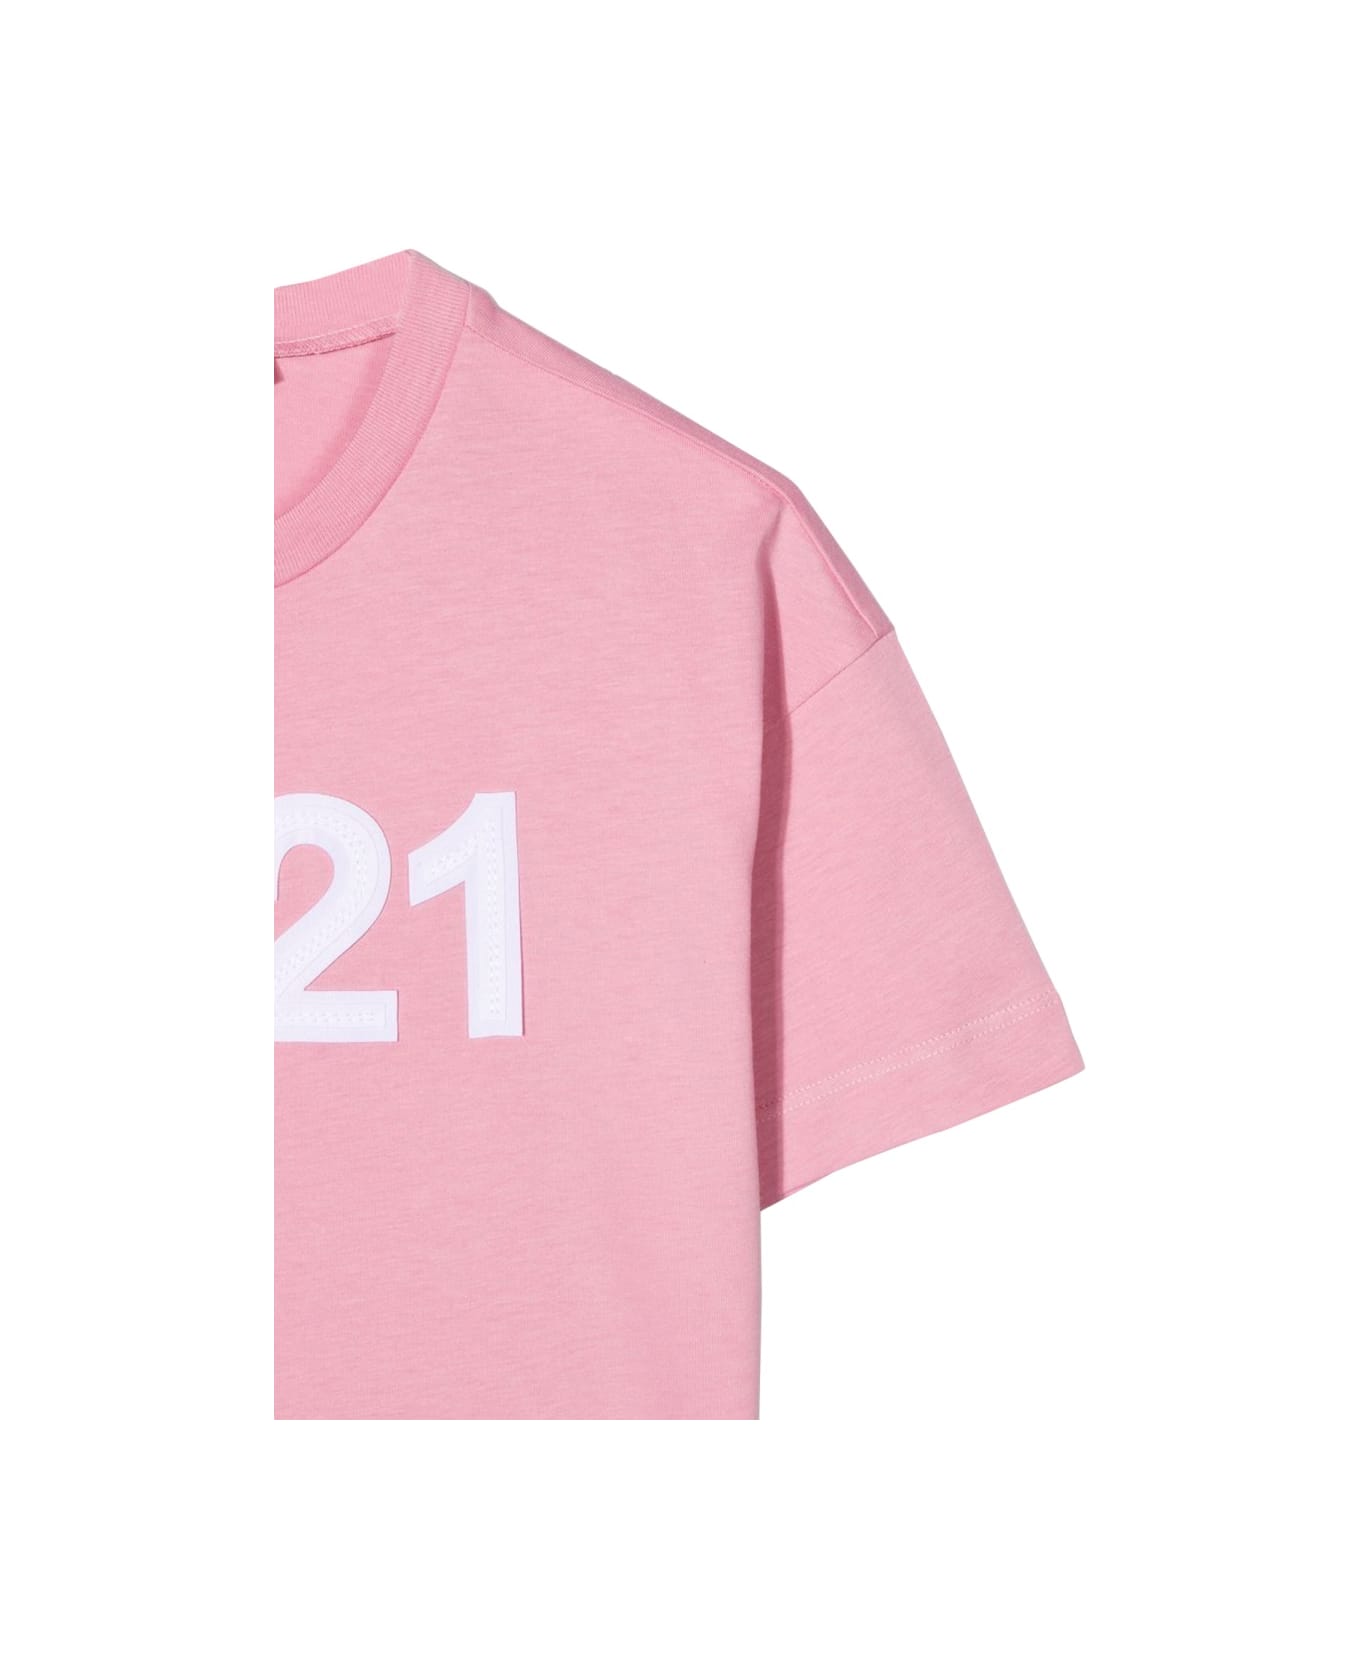 N.21 Shirt - PINK